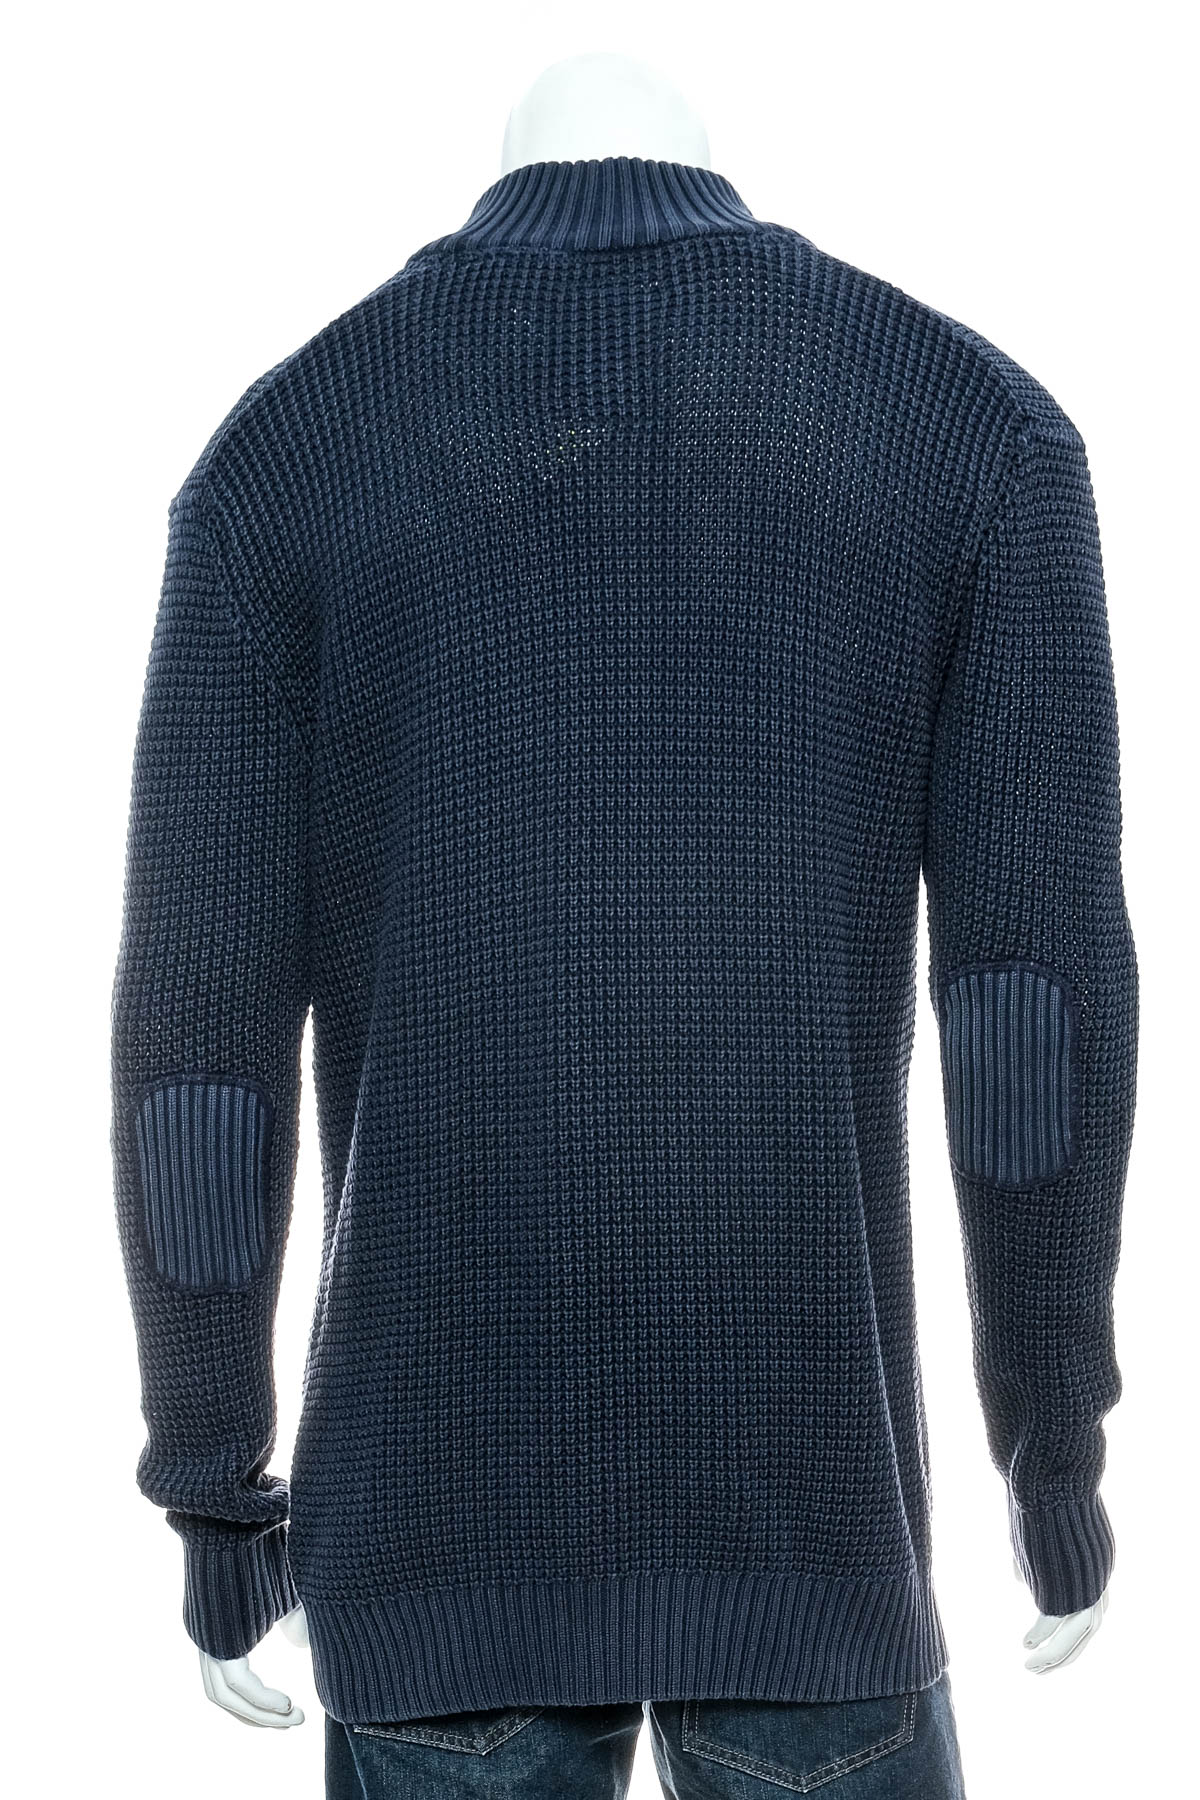 Men's sweater - Tom Tompson - 1